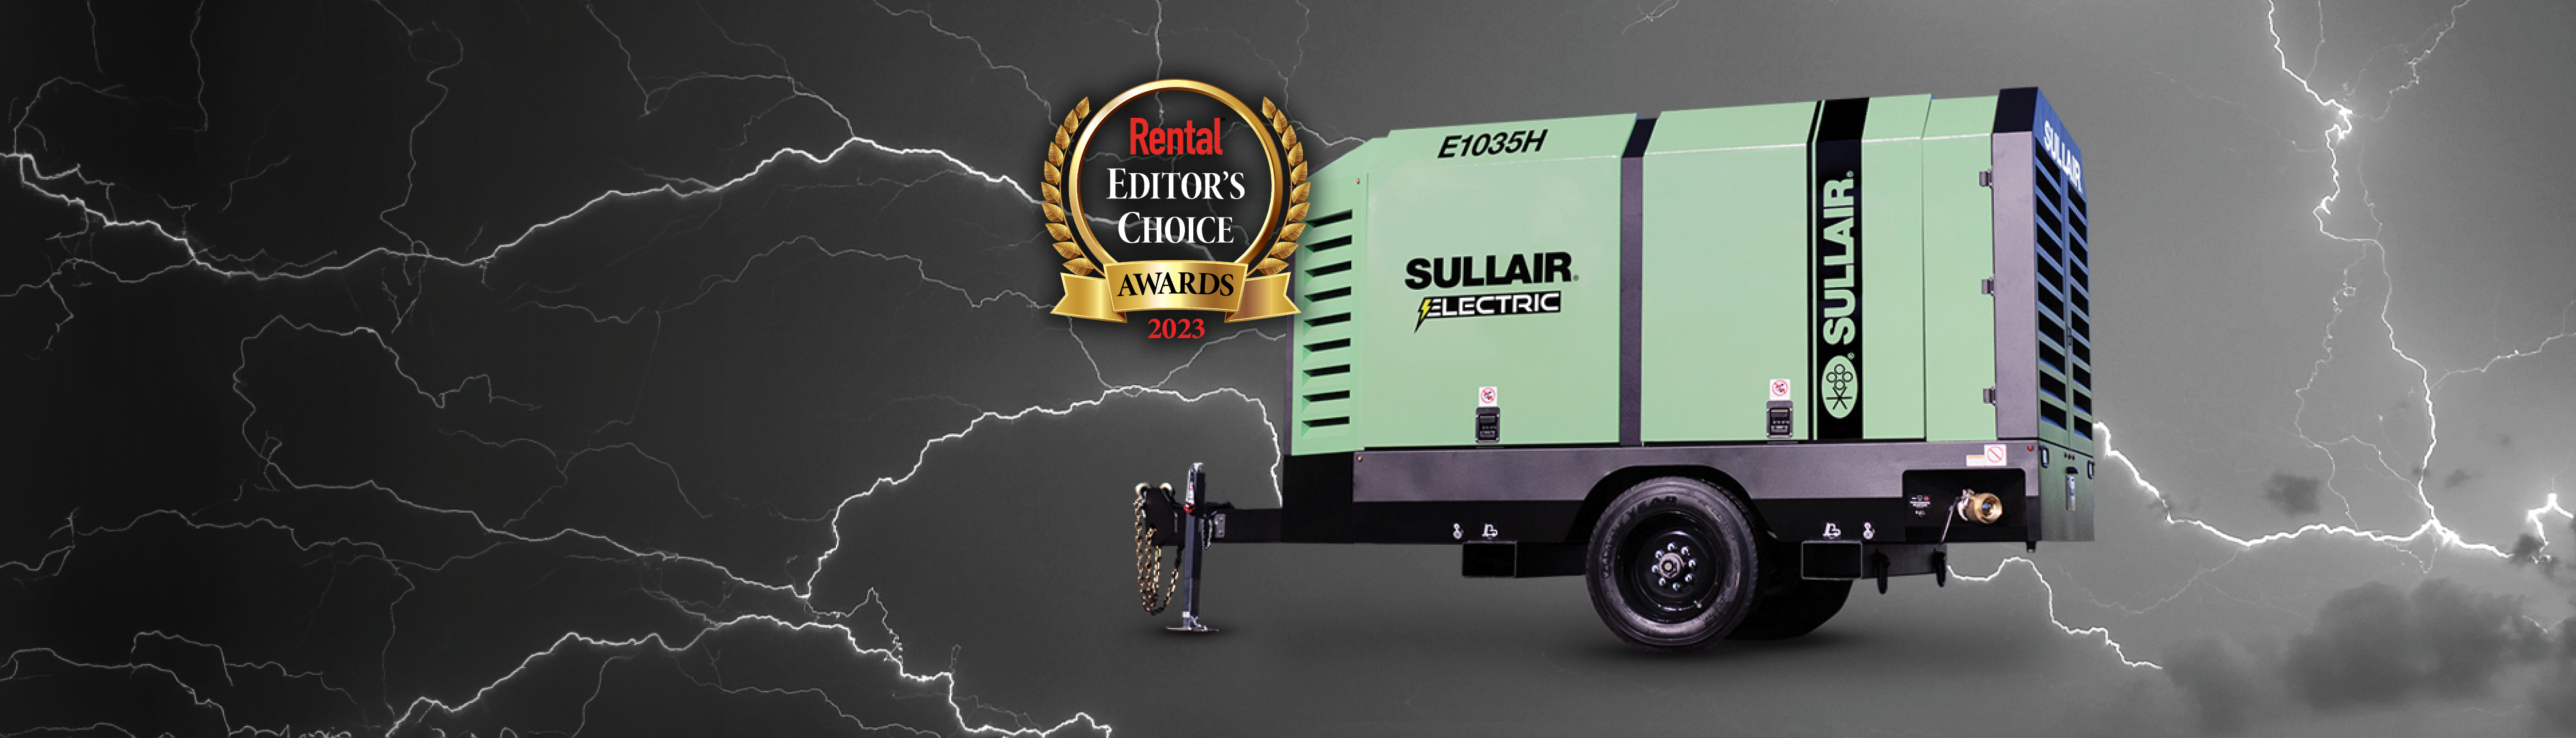 Sullair E1035H portable electric air compressor, winner of a Rental 2023 Editor's Choice Award